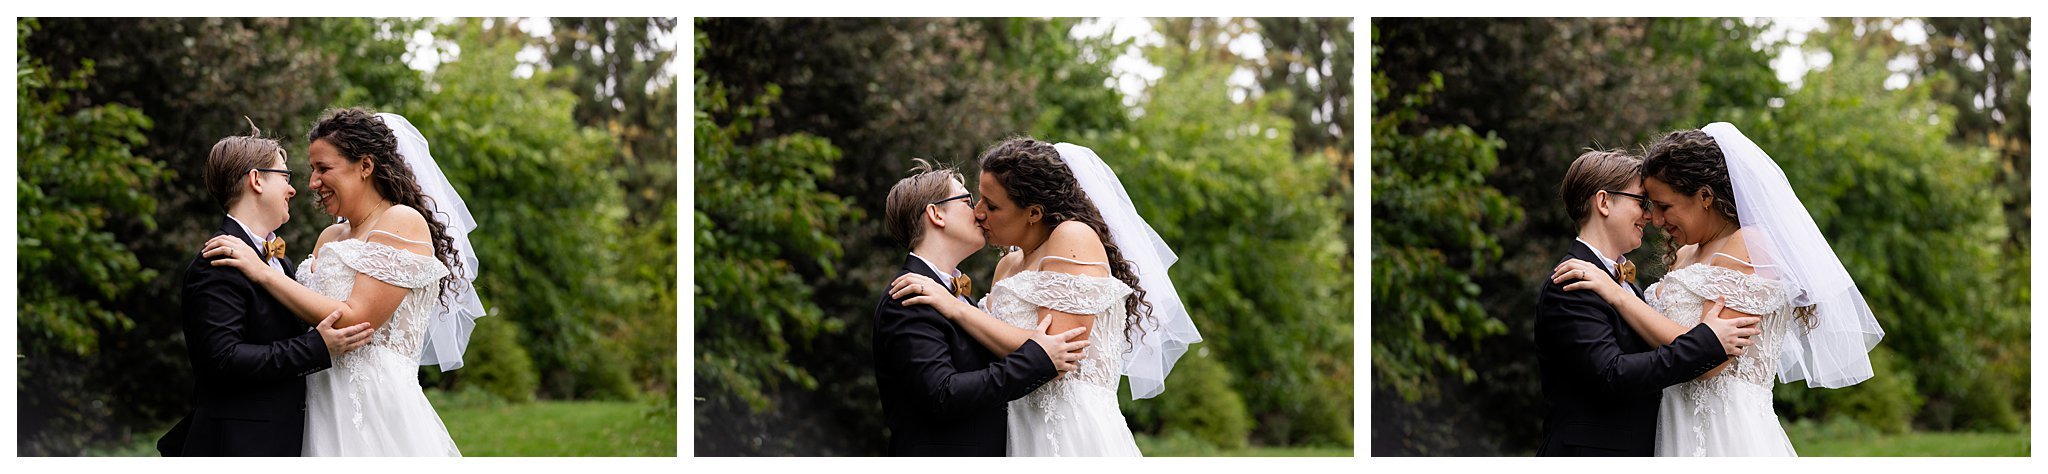 Angela Sabz Queer Fall Wedding Montreal_0007.jpg